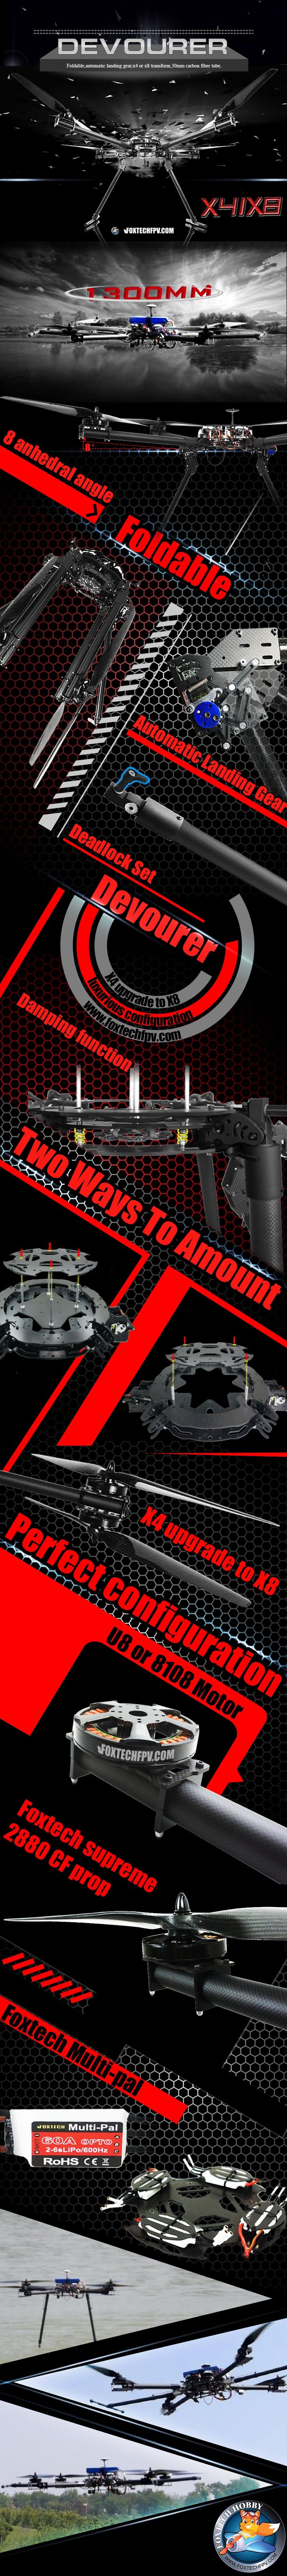 Foxtech Hobby：DJI|multicopter|multirotor|TMOTOR|T-Motor|NAZA|FPV|handheld gimb...